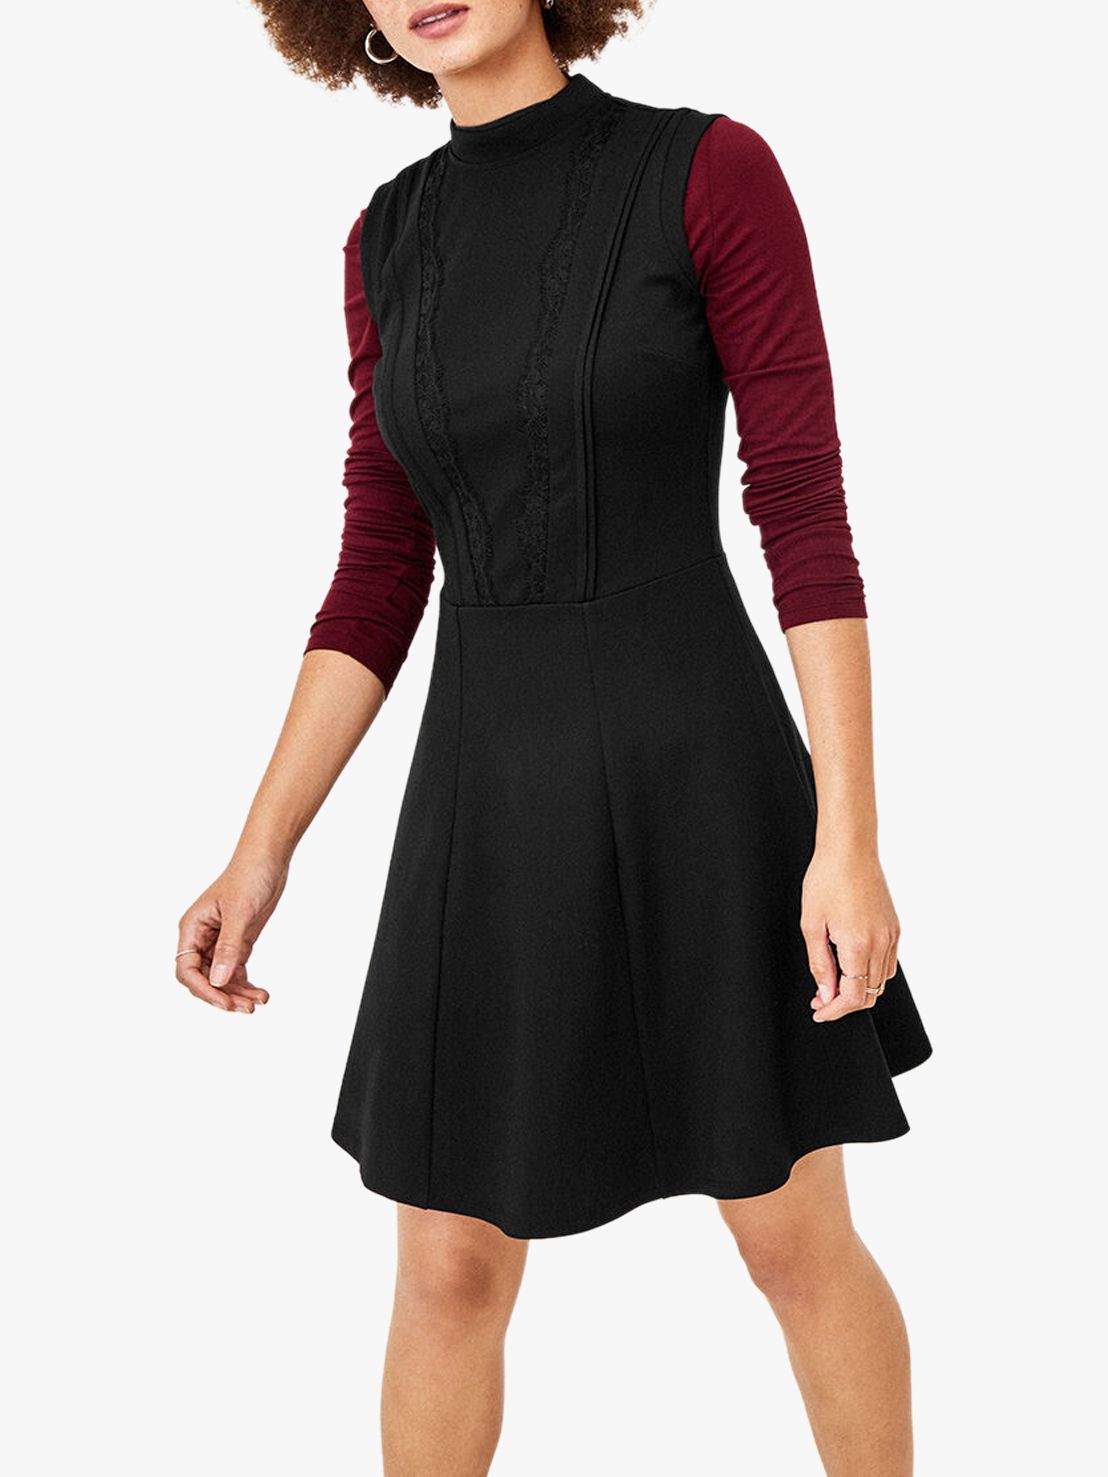 Oasis Lace Trim Sleeveless Dress, Black, XL